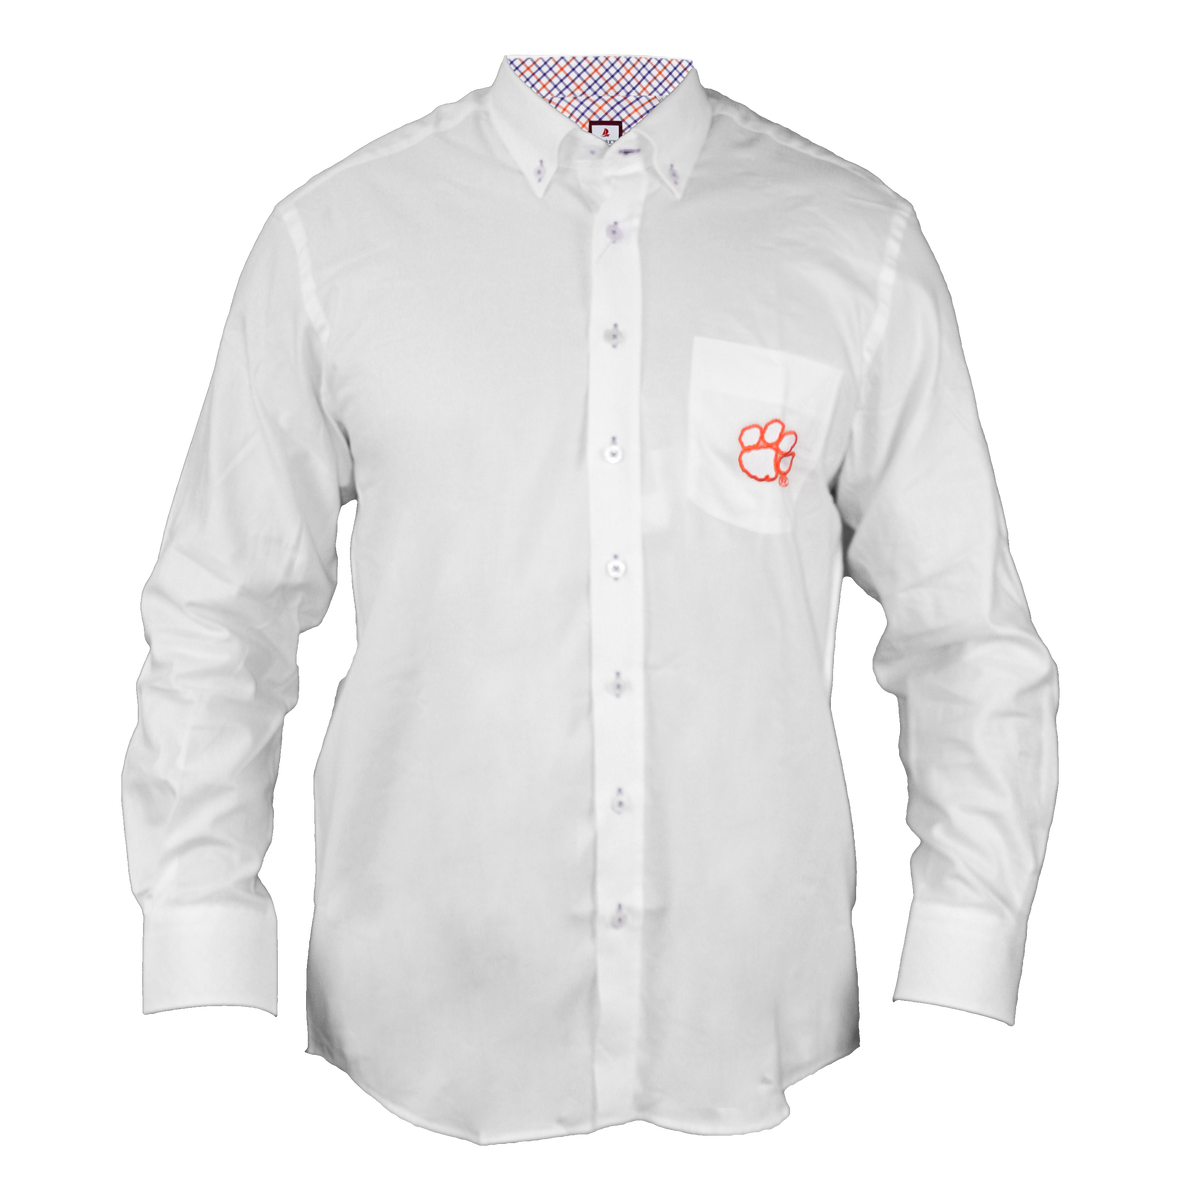 Dress Shirt With White Paw Orange Outline on Pocket